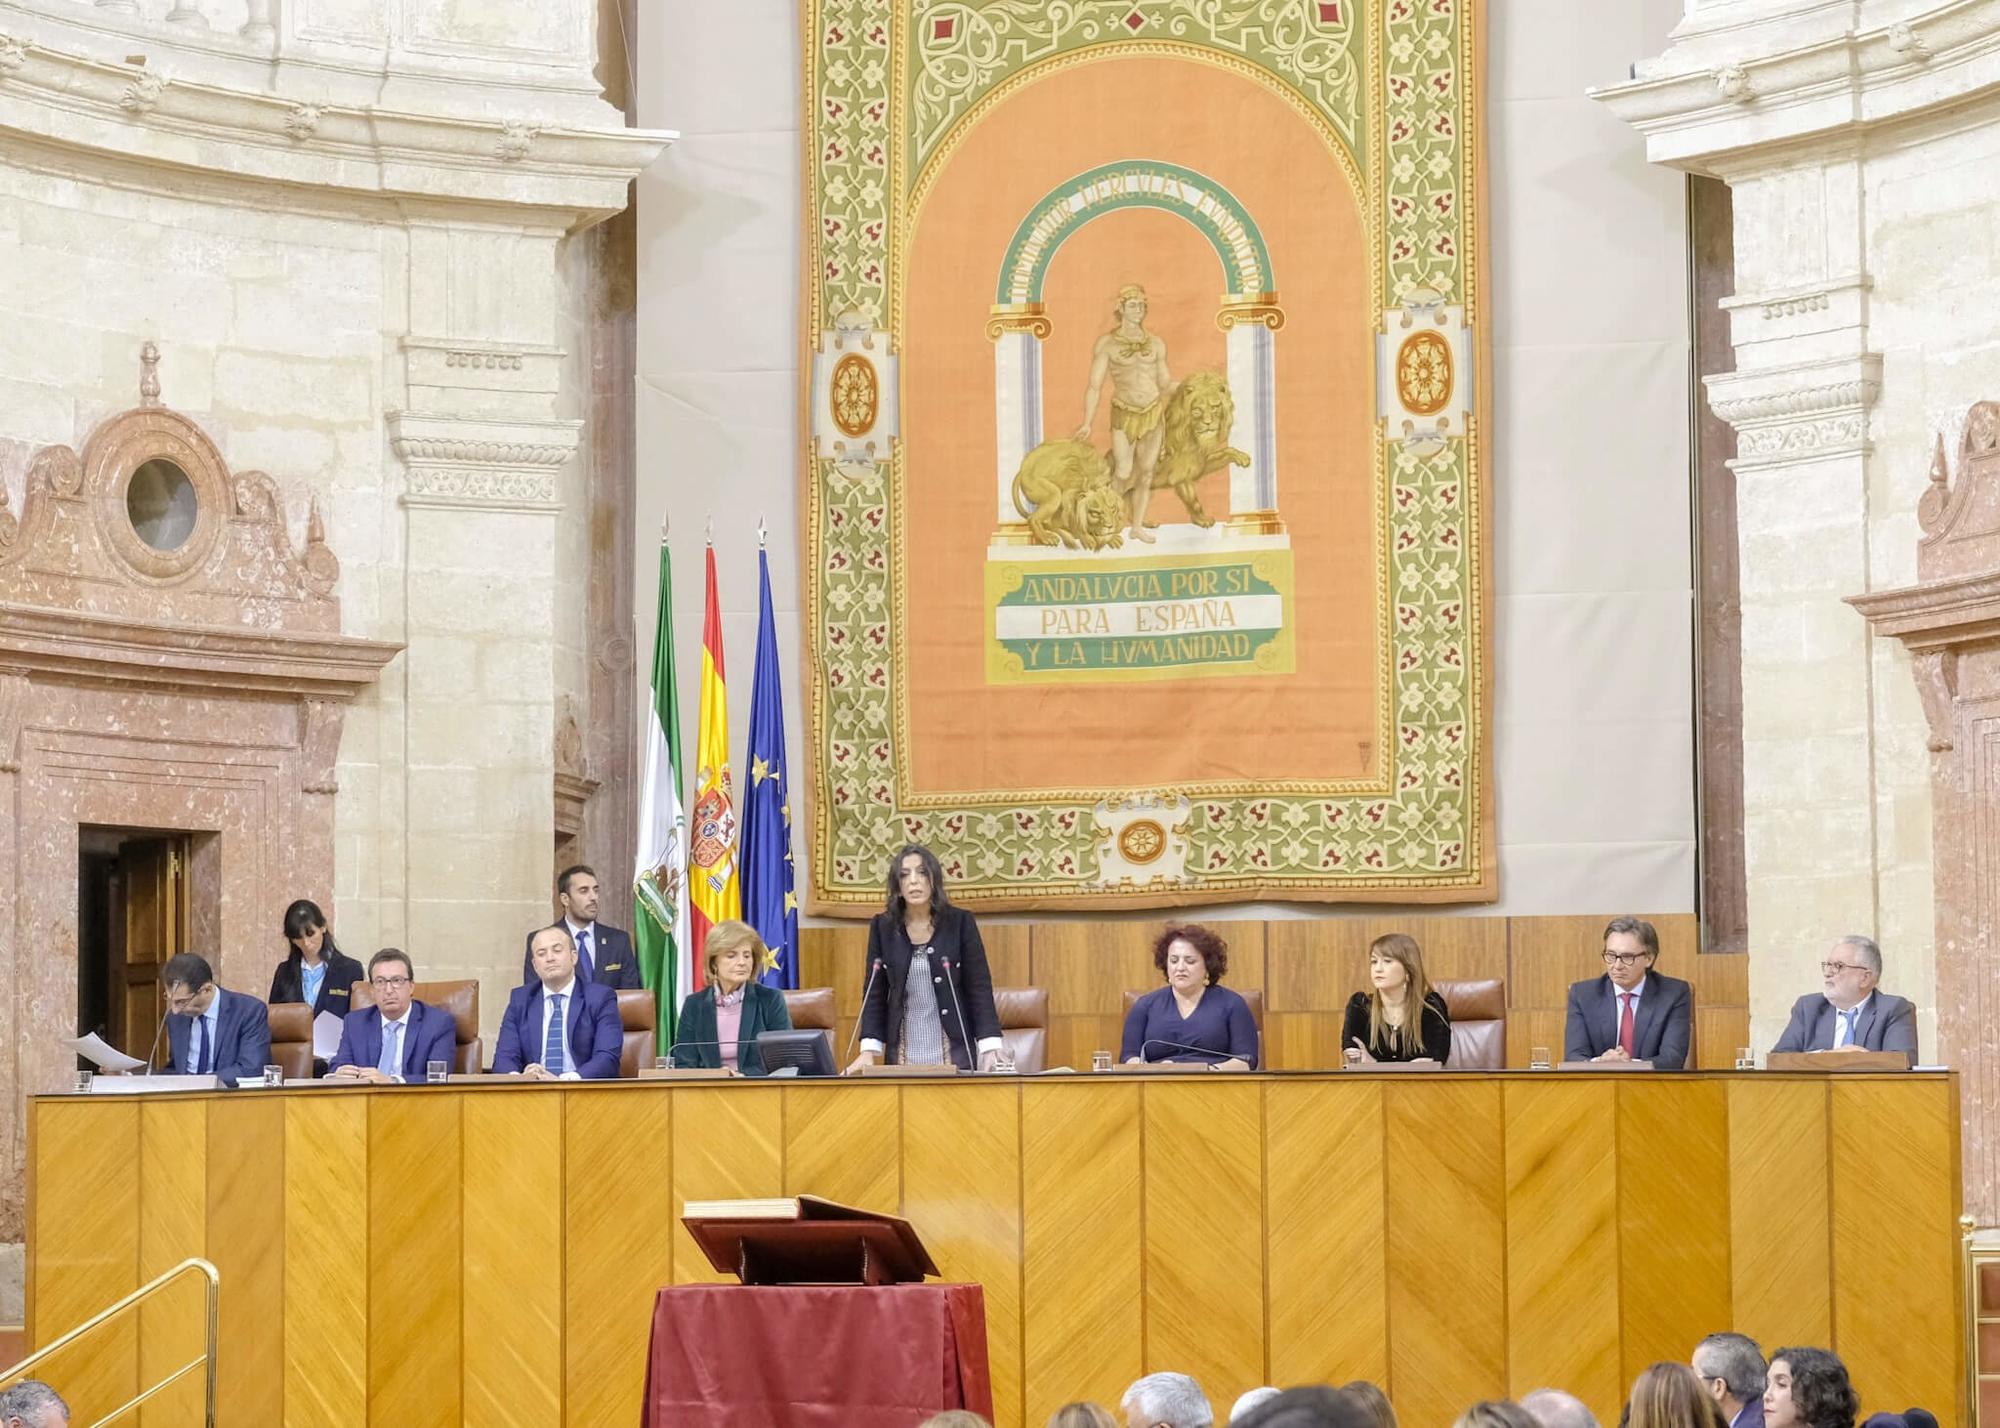 Inicio XI Legislatura Parlamento Andalucía 01